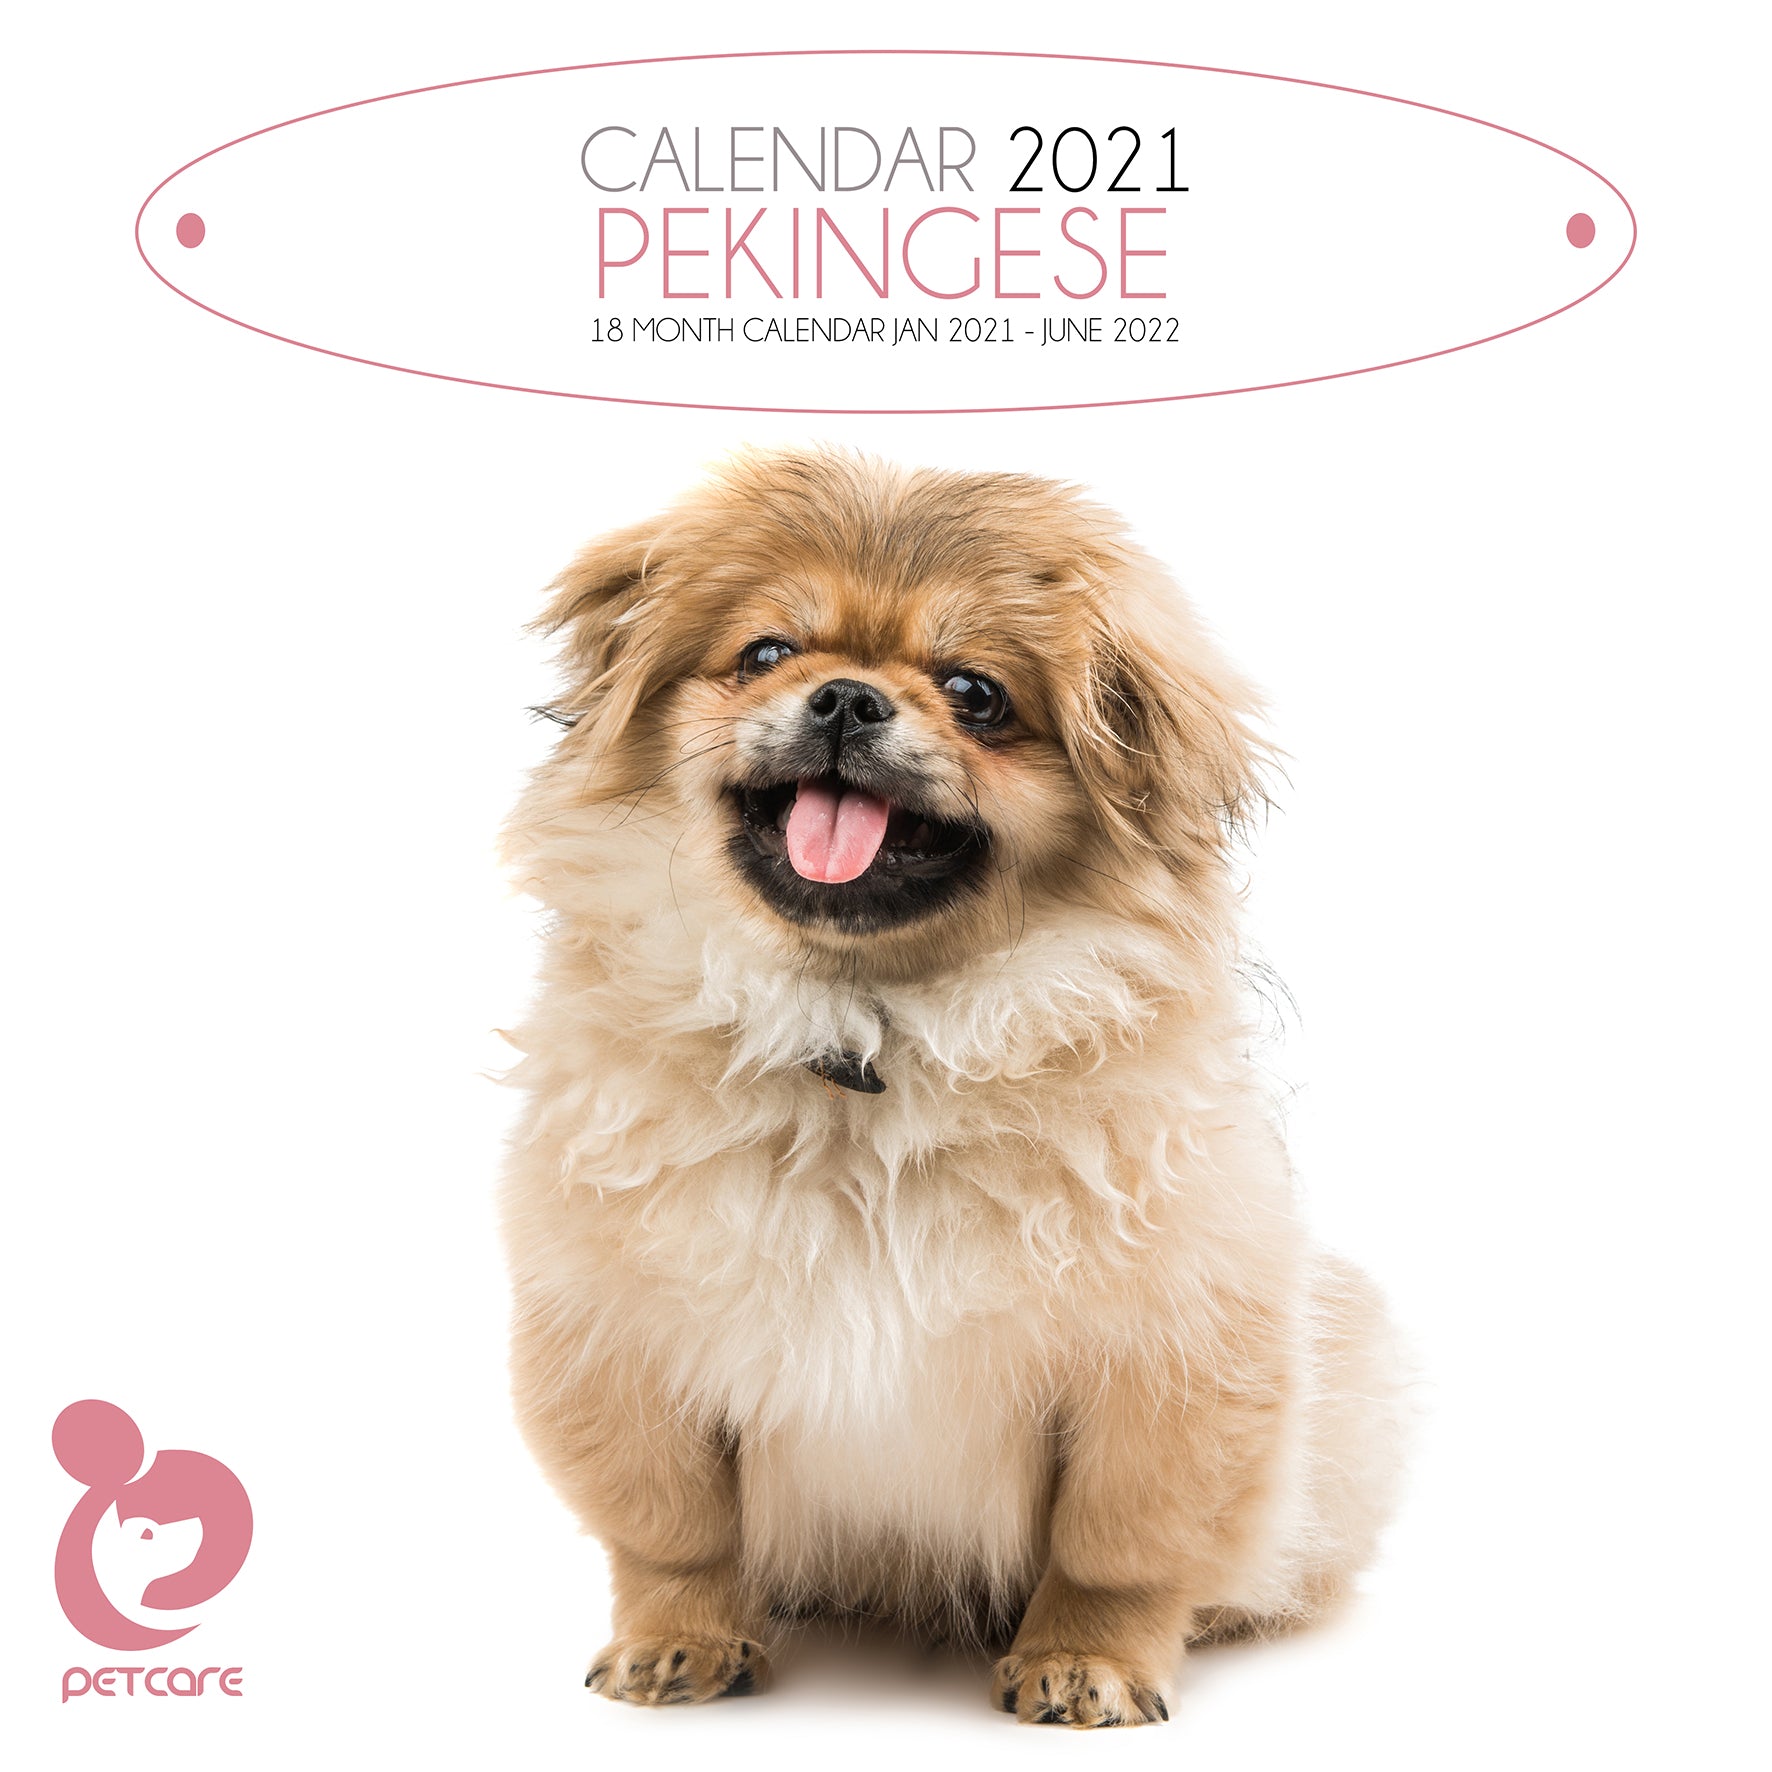 2021 pekingese calendar 2021 Pekingese Calendar Cardsharp Online 2021 pekingese calendar